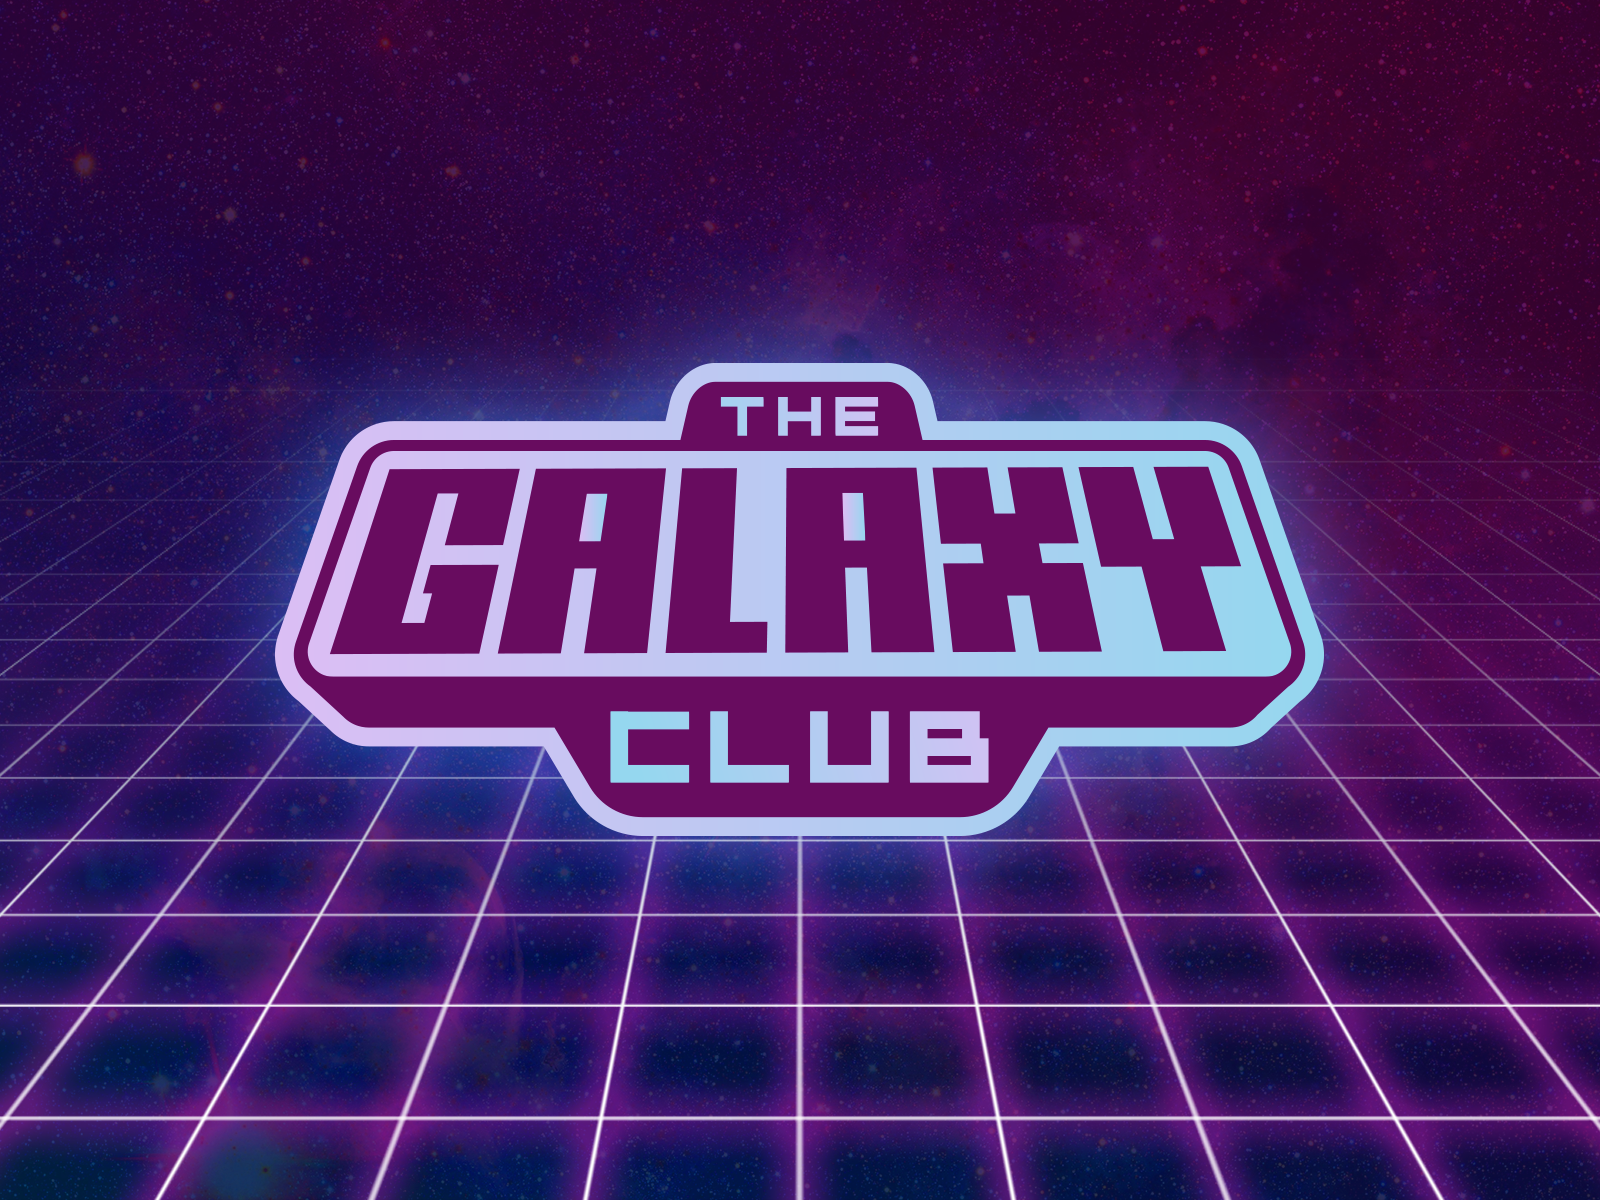 The Galaxy Club by Mark Hardin on Dribbble